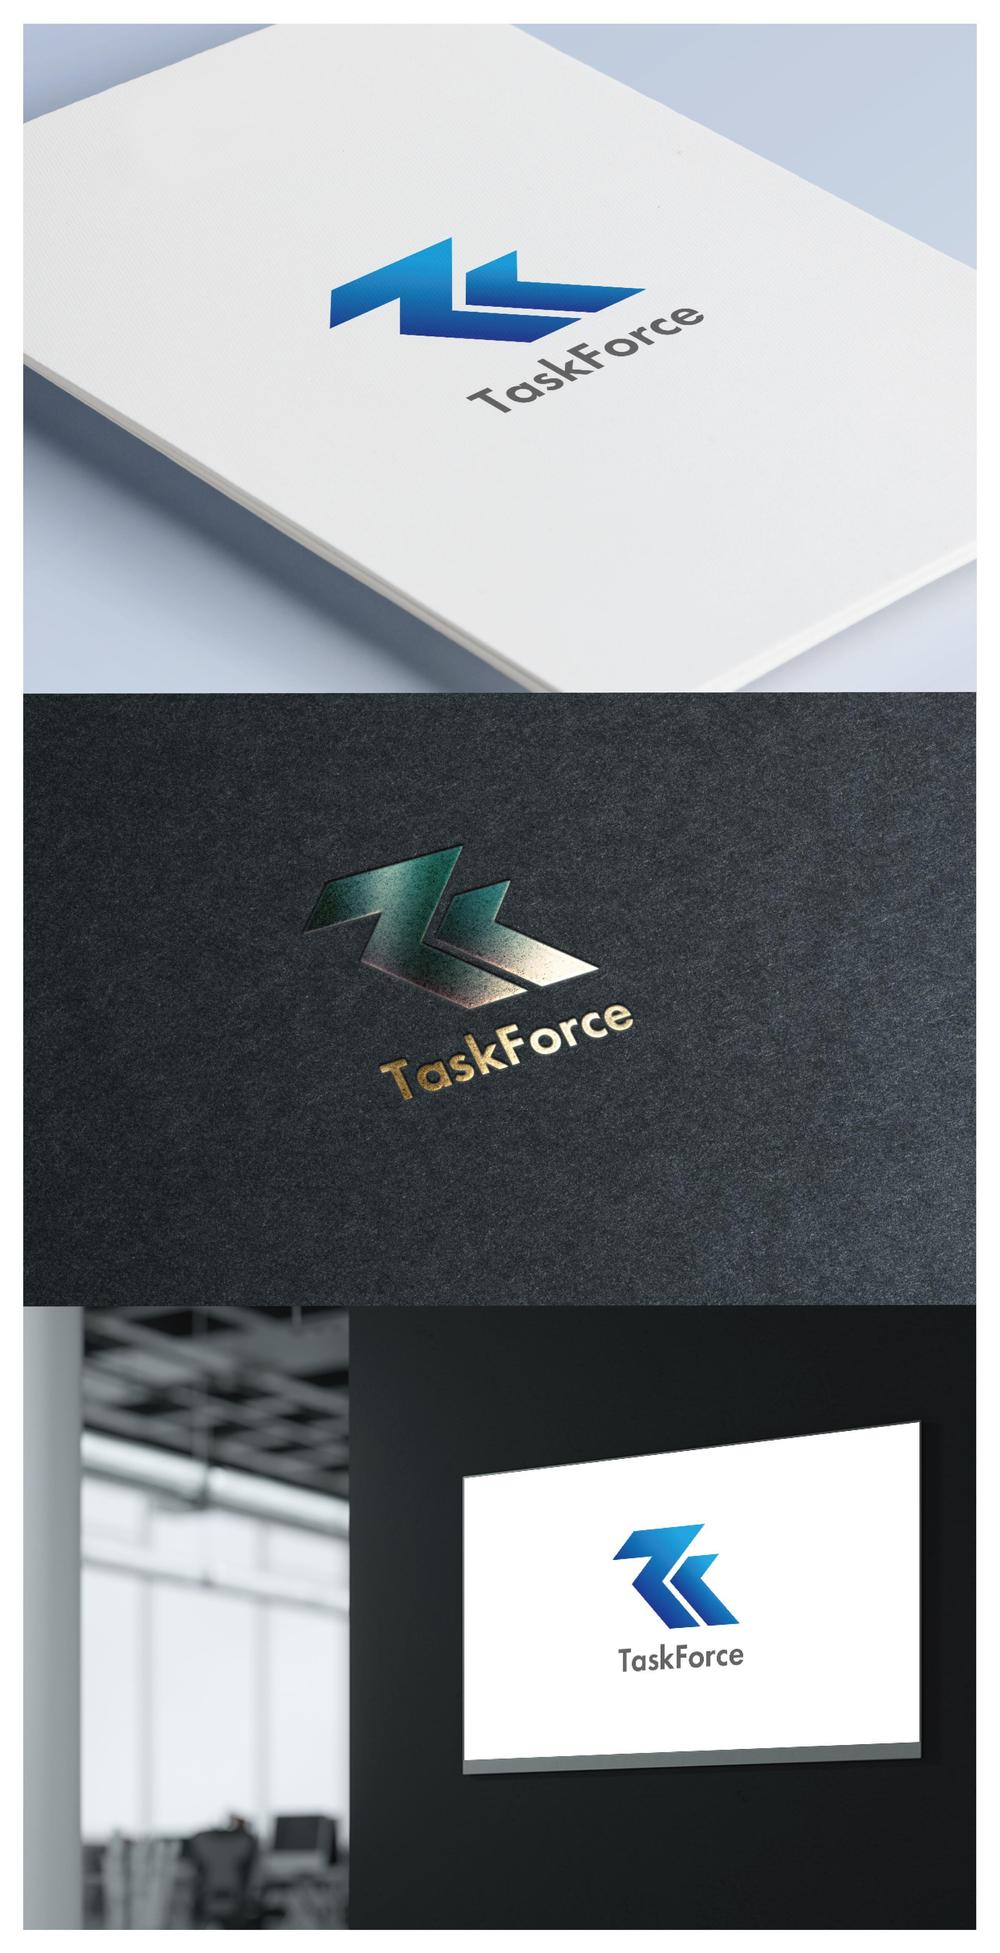 TaskForce_logo01_01.jpg